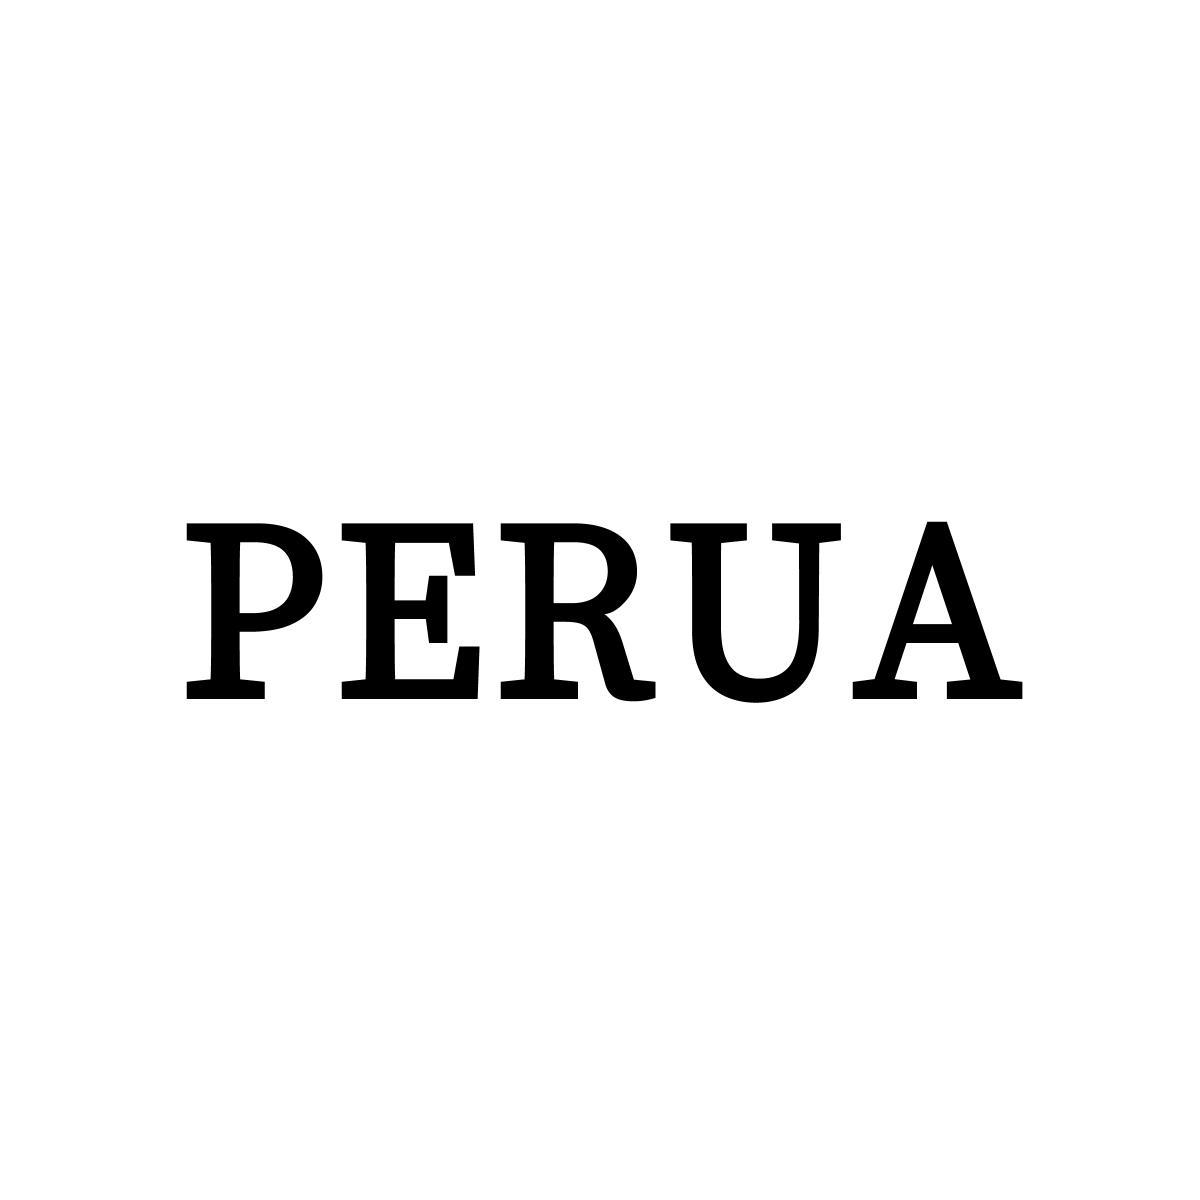 PERUA